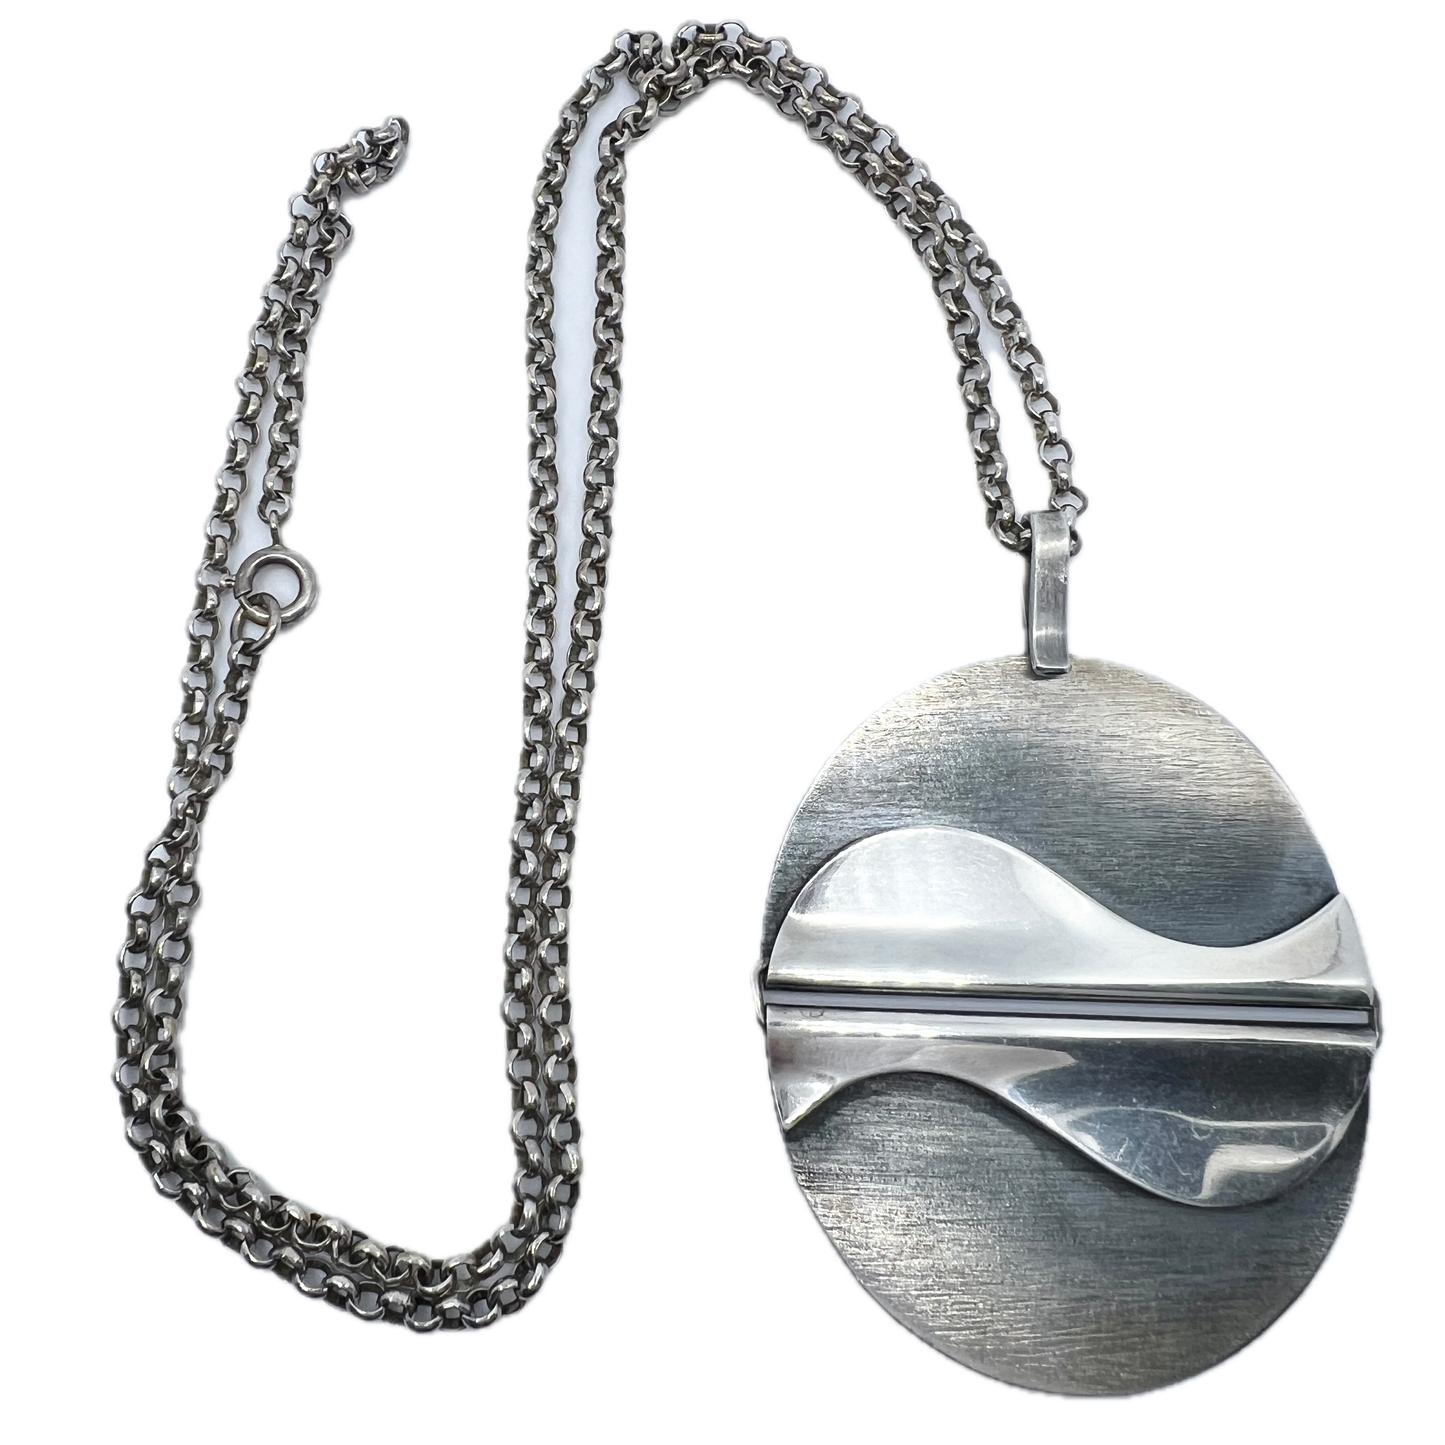 Tone Vigeland, PLUS Studio, Norway early 1970s. Large Vintage Sterling Silver Pendant necklace. Design: Fold.